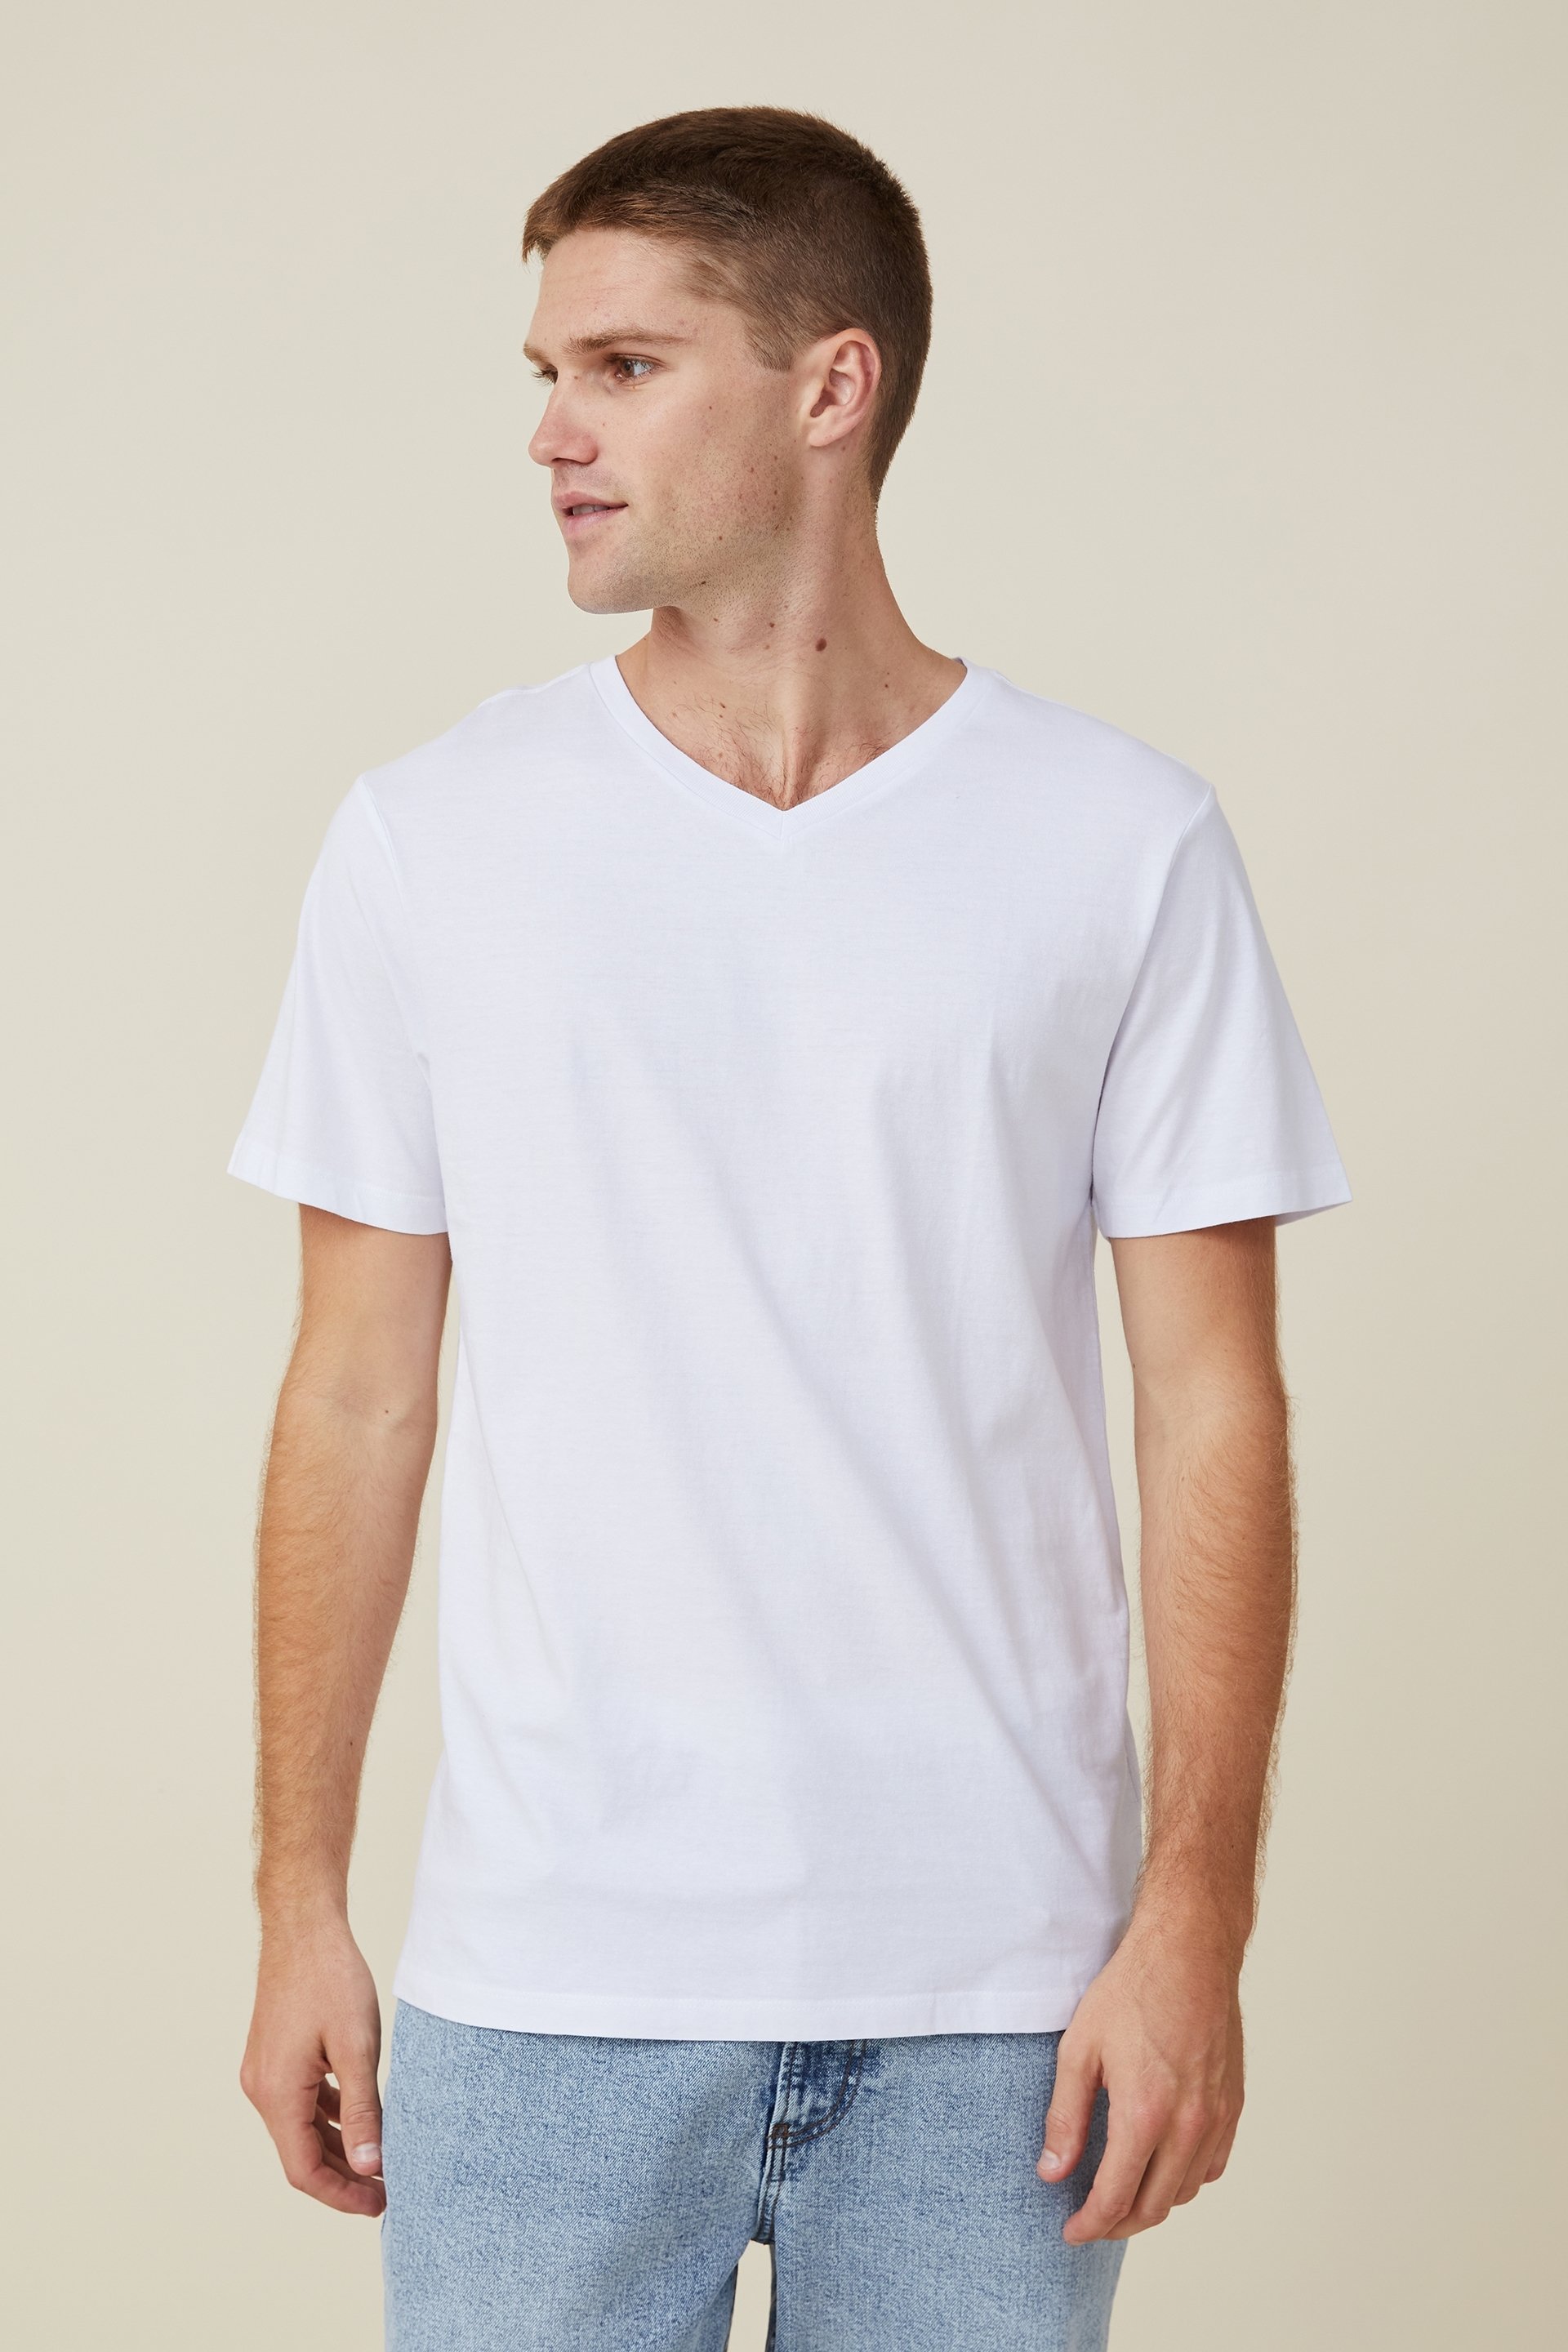 Deep V Neck Tshirt for Men Sexy Low Cut Wide Collar Top Tees Slim